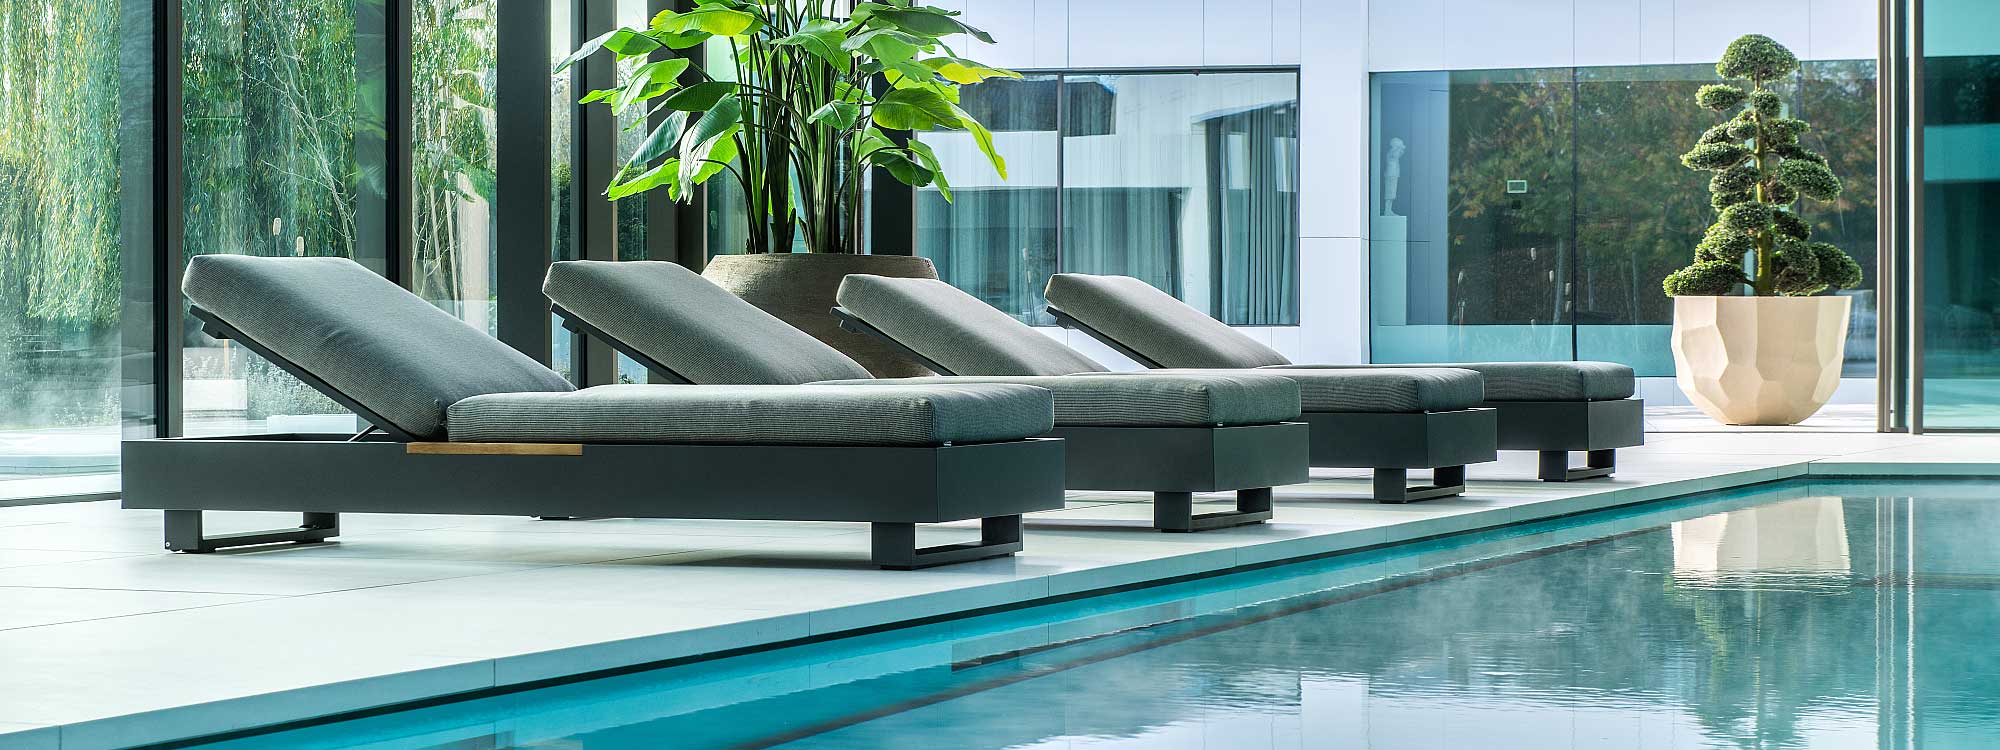 Bari sun lounger is a modern sun bed in quality aluminium garden furniture materials by Jati & Kebon minimalist outdoor furniture company.